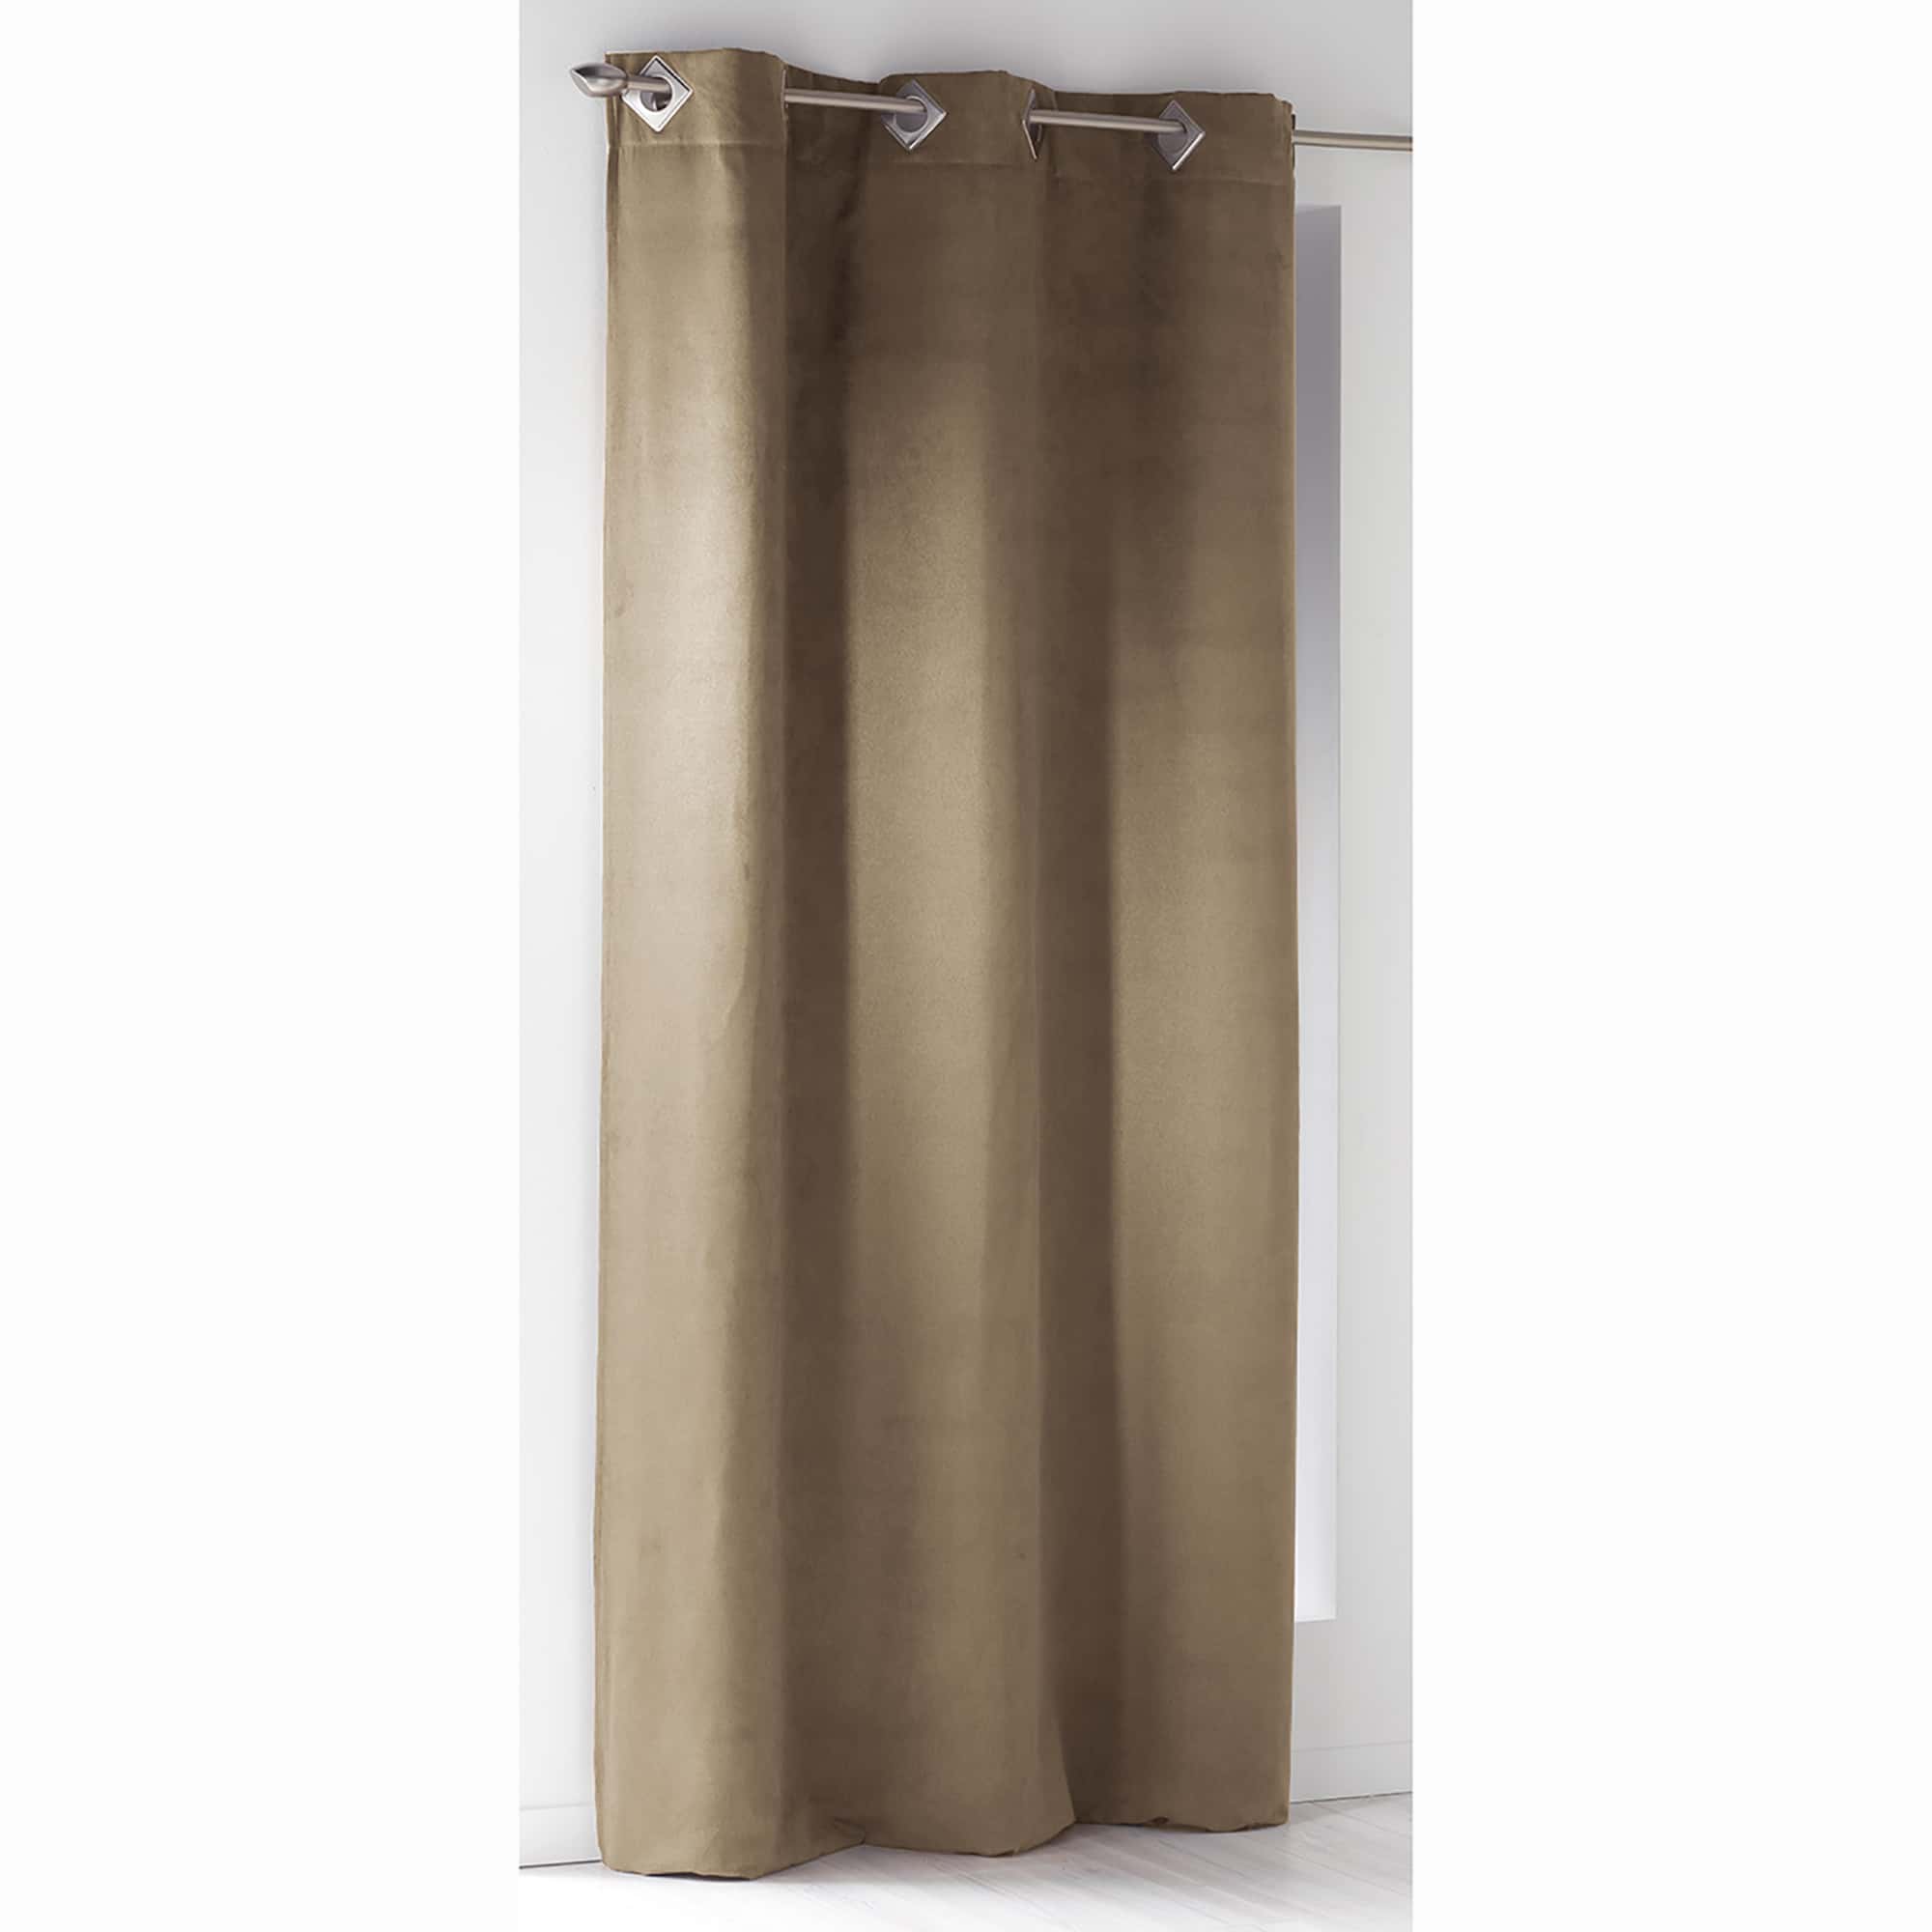 sand beige window curtain panel x 1 imitation suede velvet effect for cozy decor